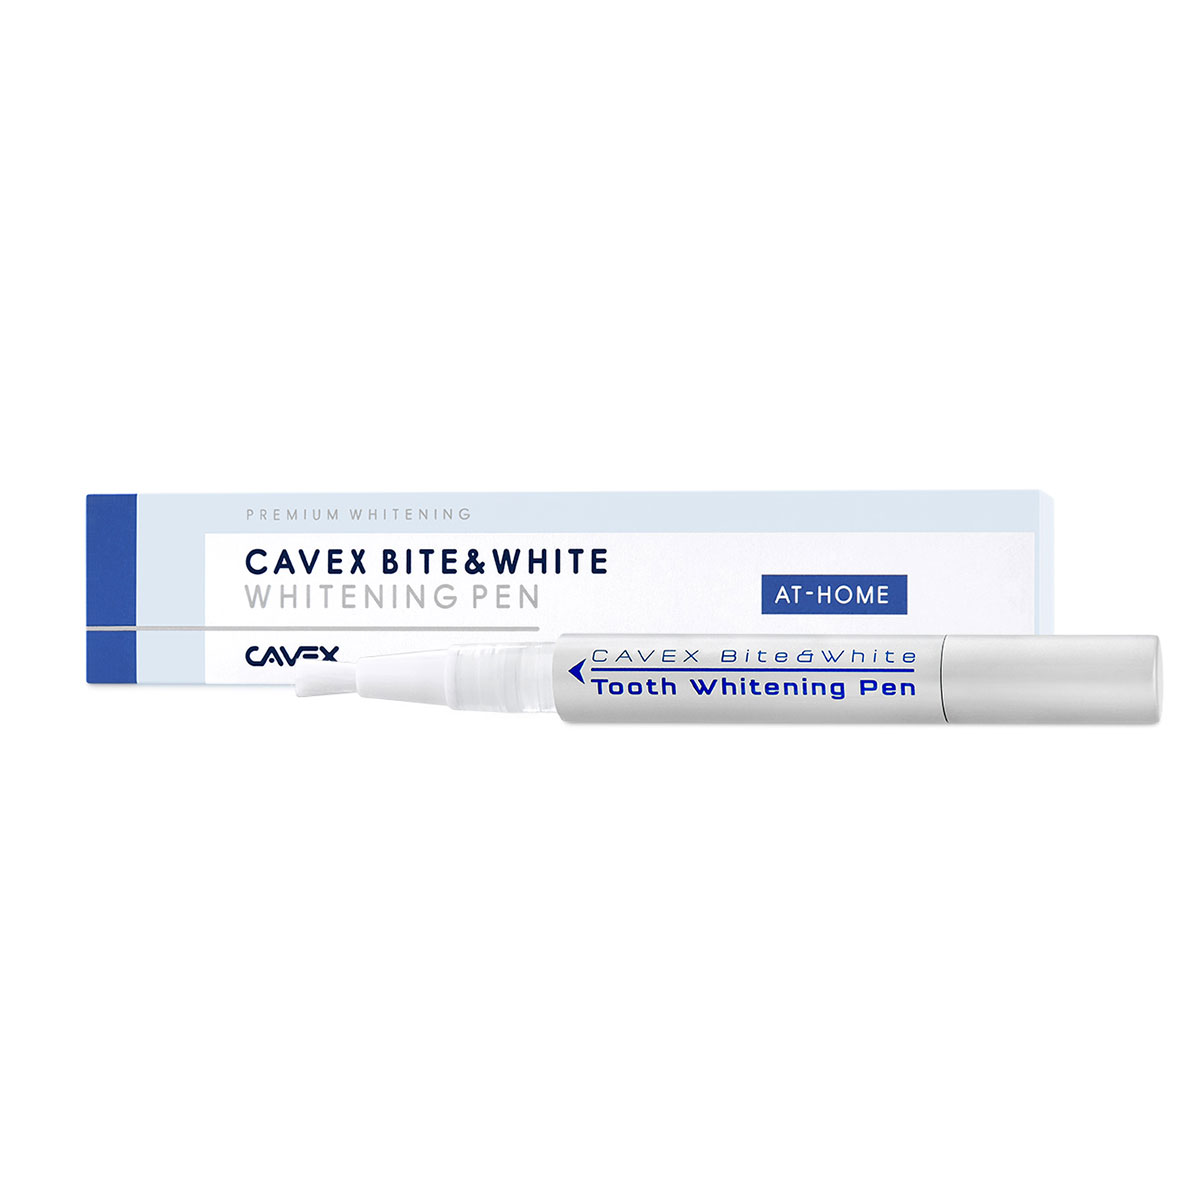 Cavex Bite&White Tooth Whitening Pen